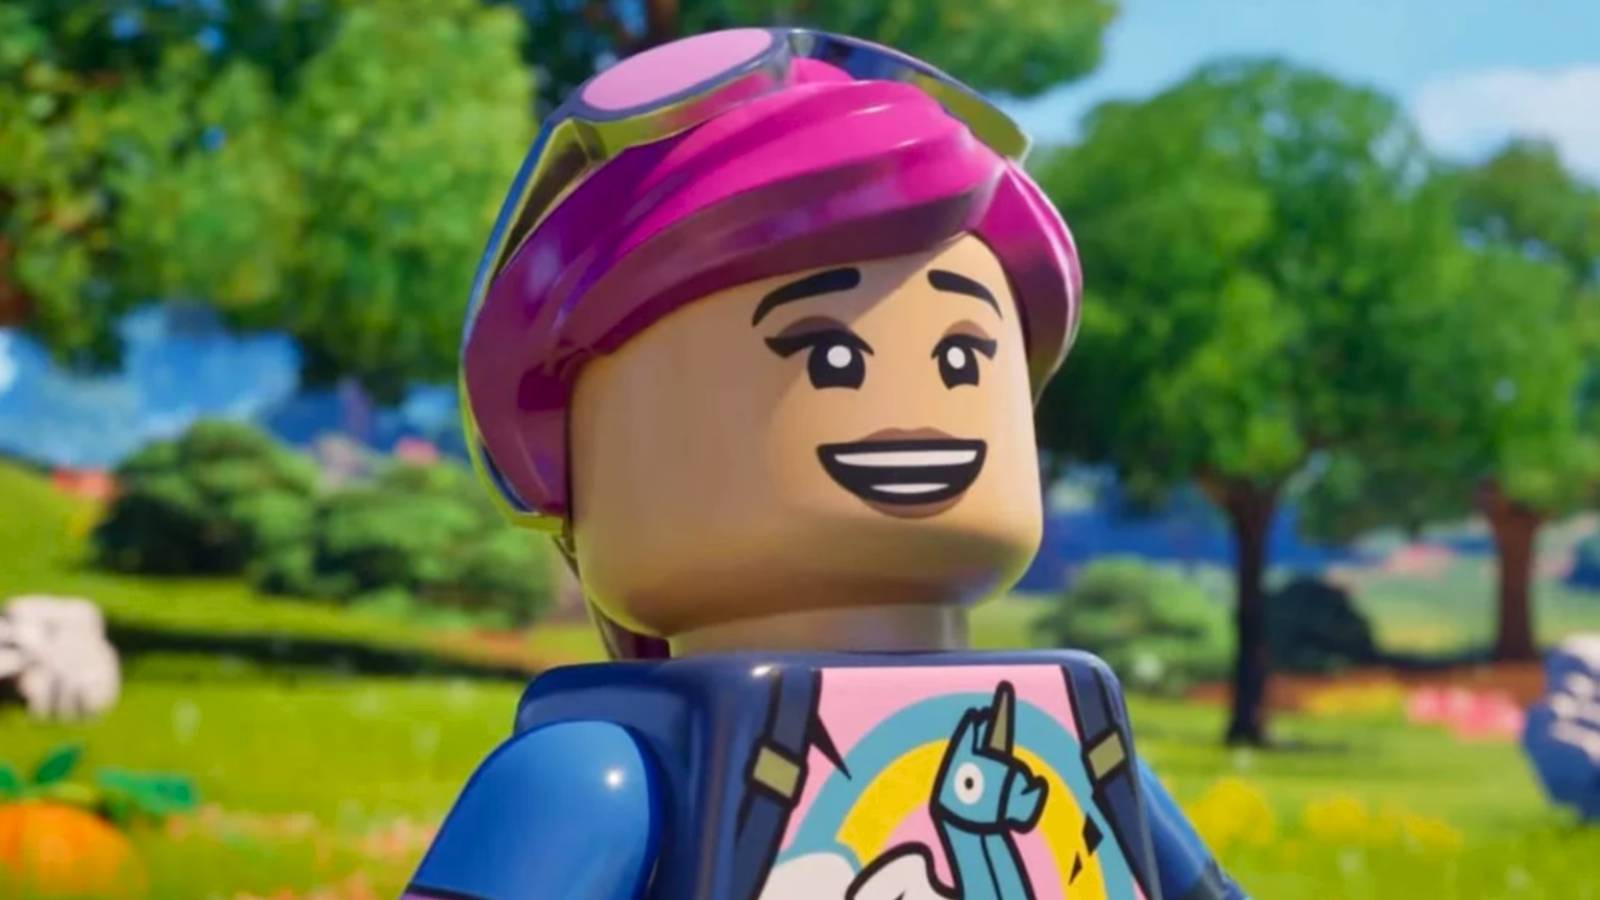 LEGO Fortnite character smiling.